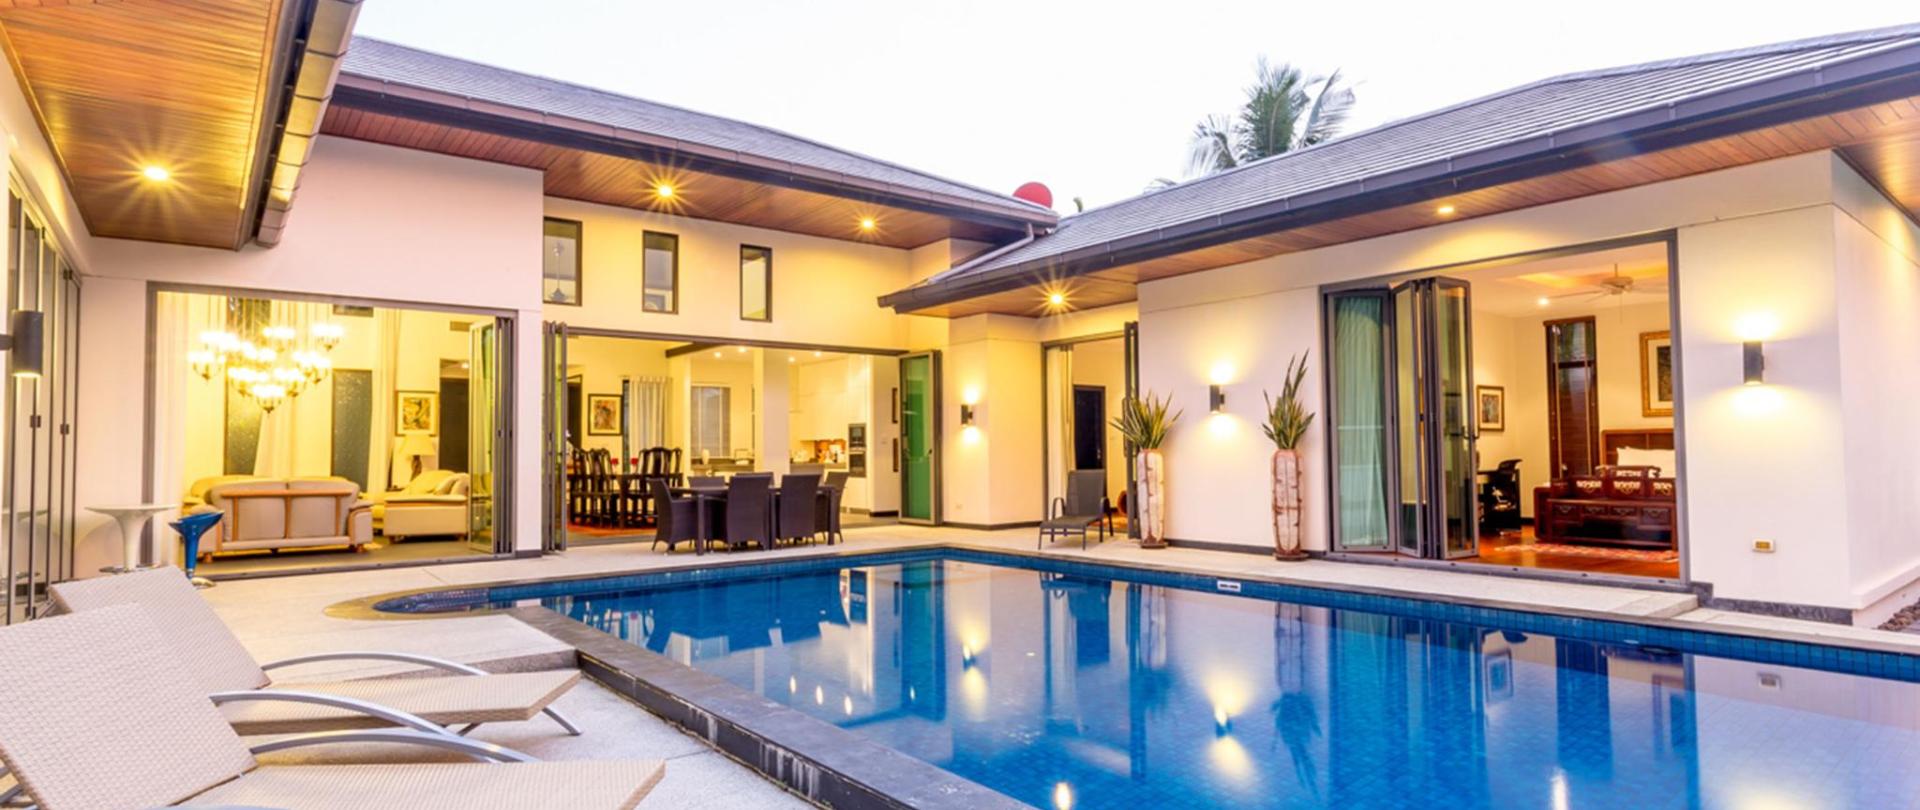 Discount [80% Off] Villa Mandala Indonesia | Jane S Hotel 5 Online